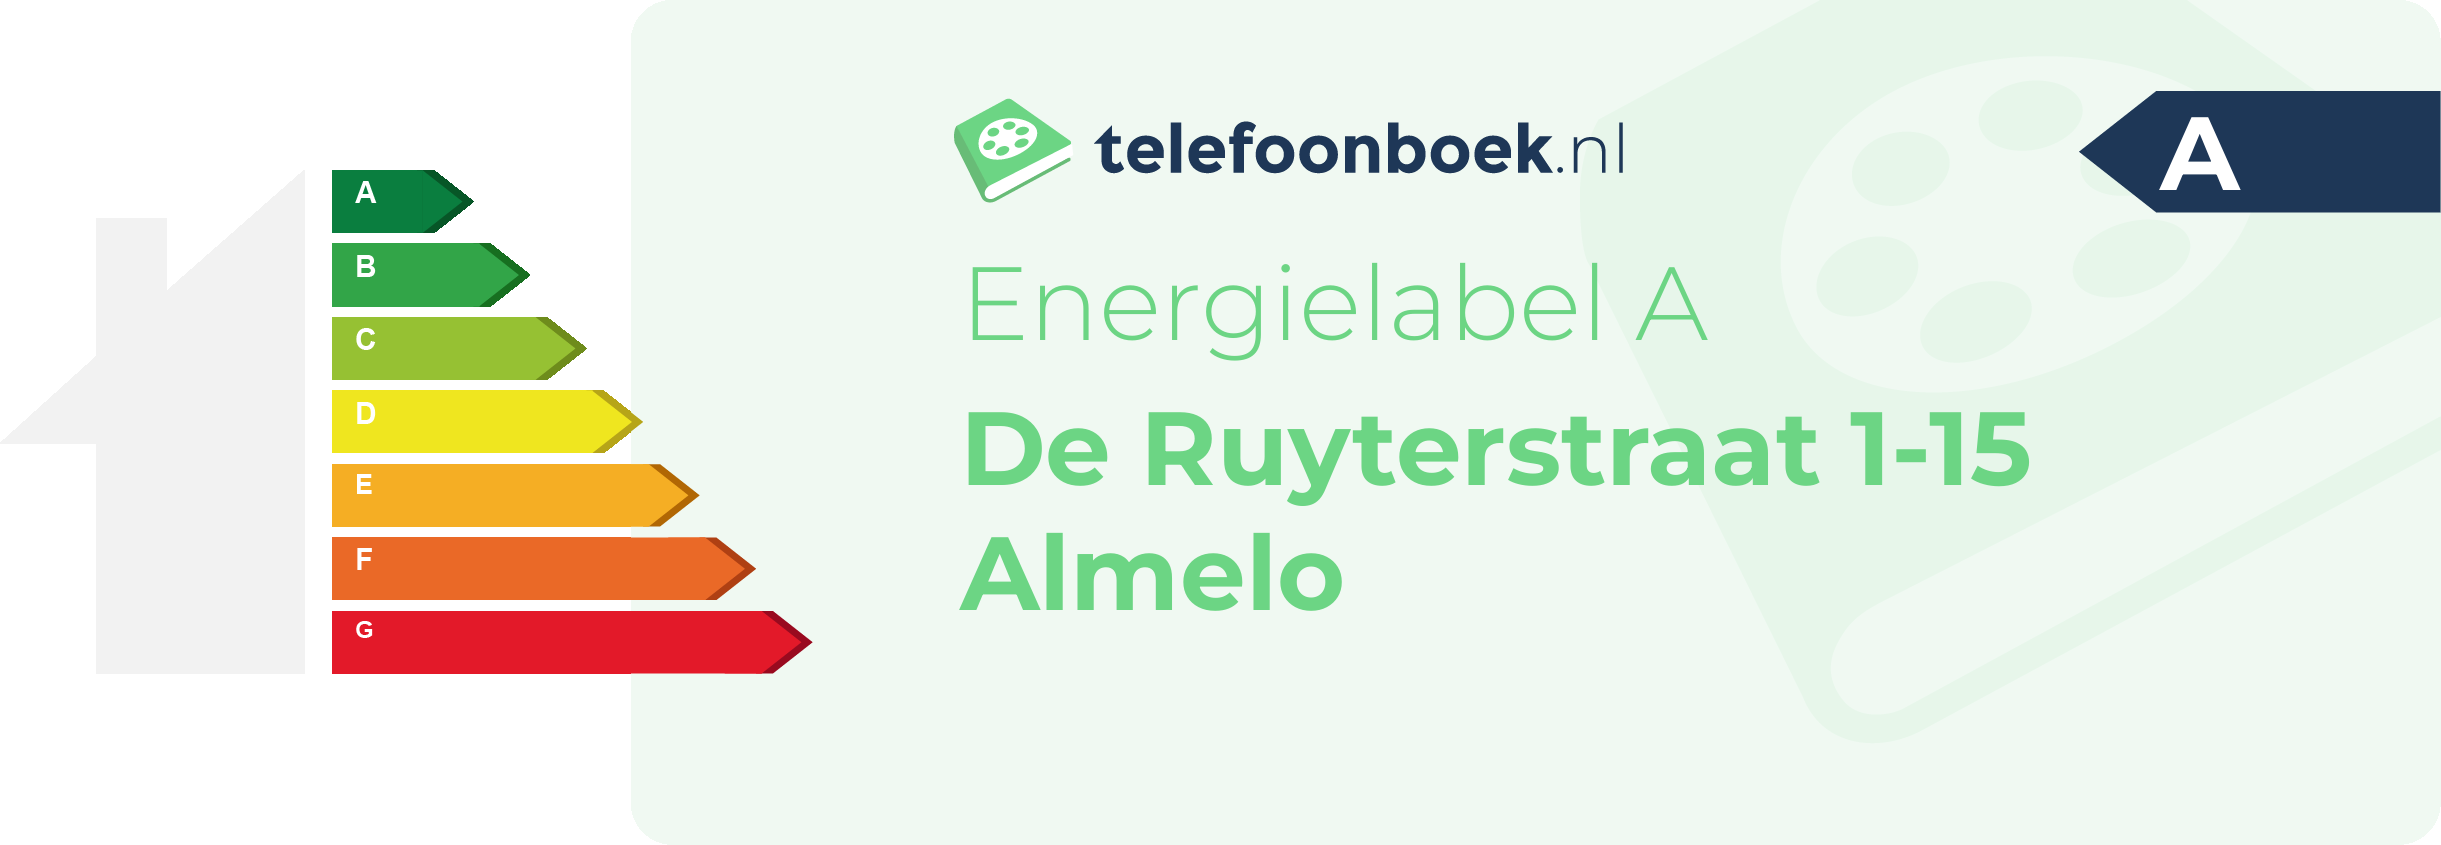 Energielabel De Ruyterstraat 1-15 Almelo